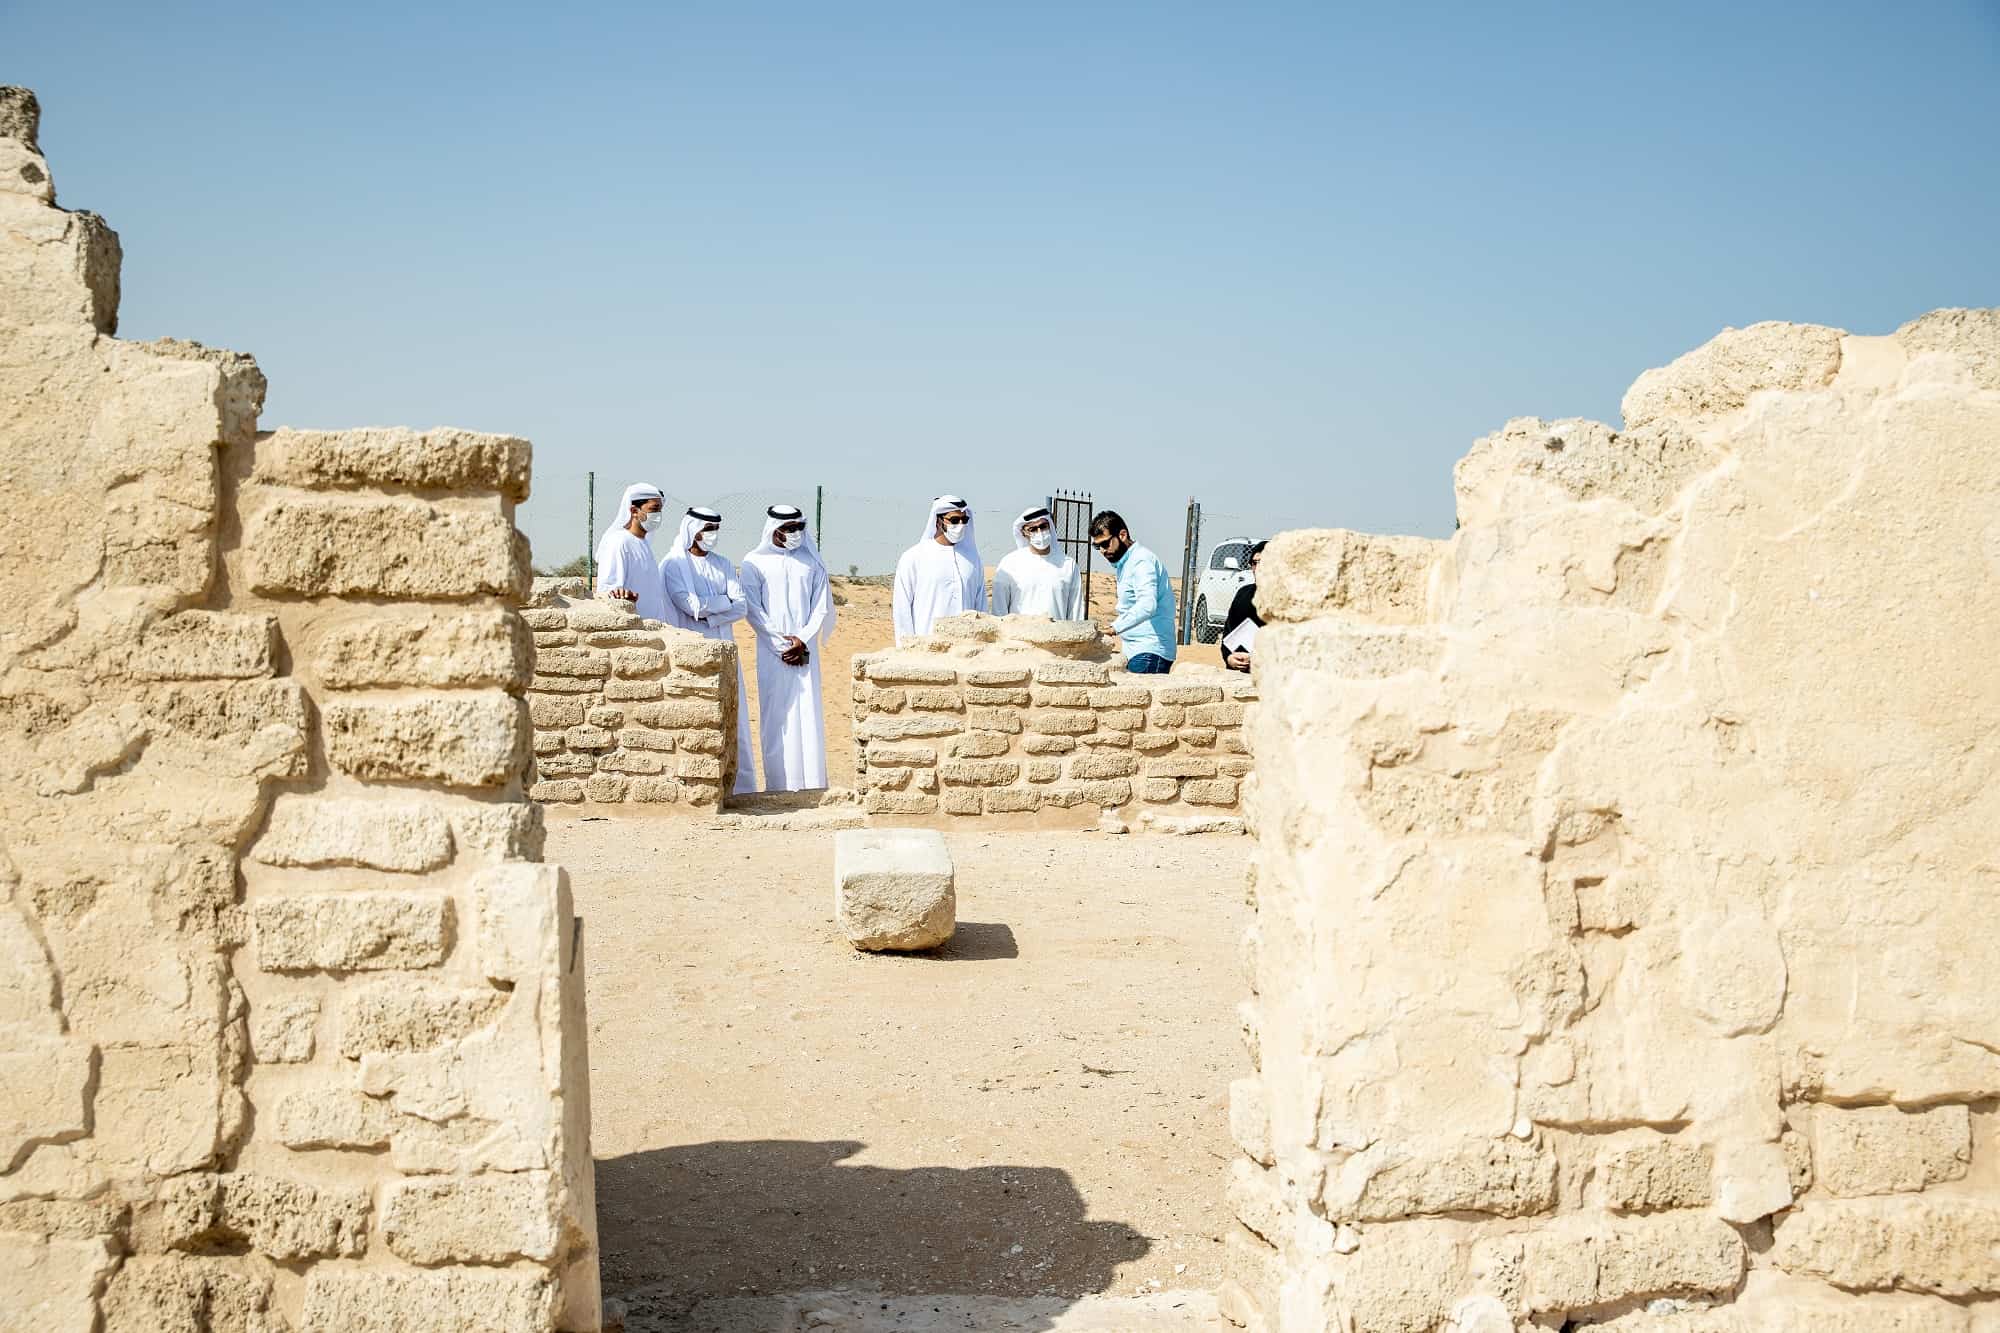 Descubrindo a natureza da vida en Umm al-Quwain, Tell Abraq, hai 2500 anos